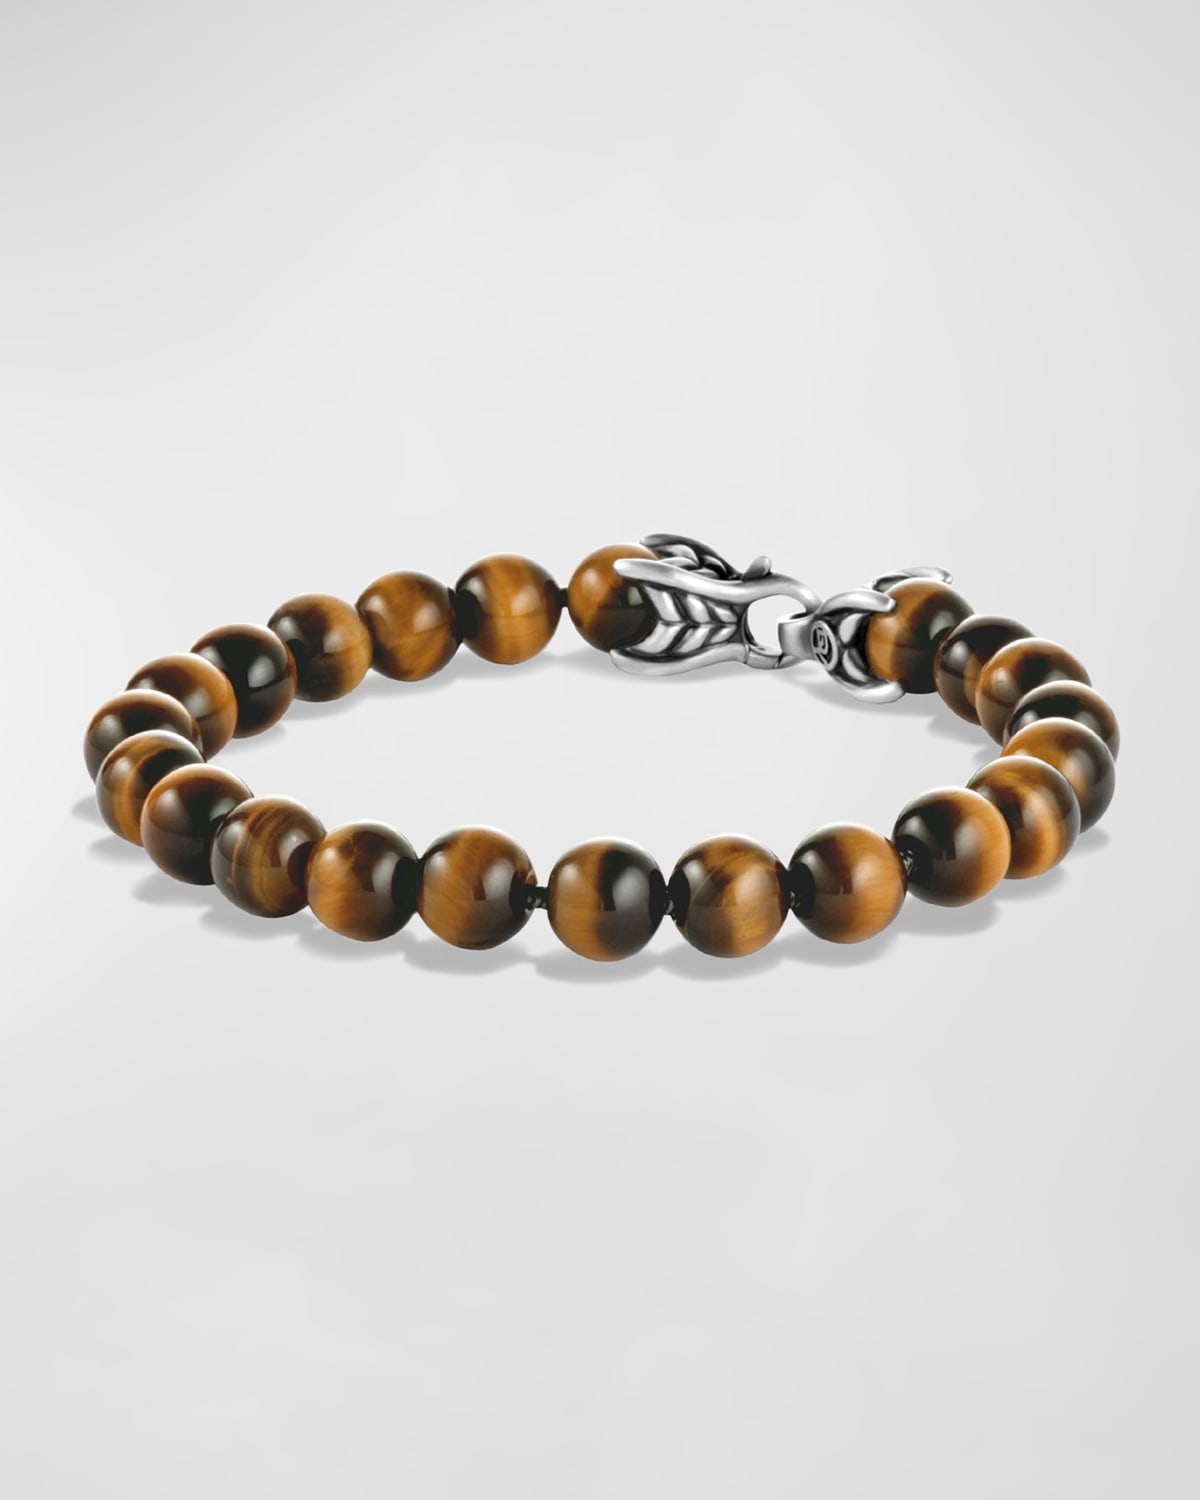 Men's Spiritual Beads Bracelet with Silver, 8mm